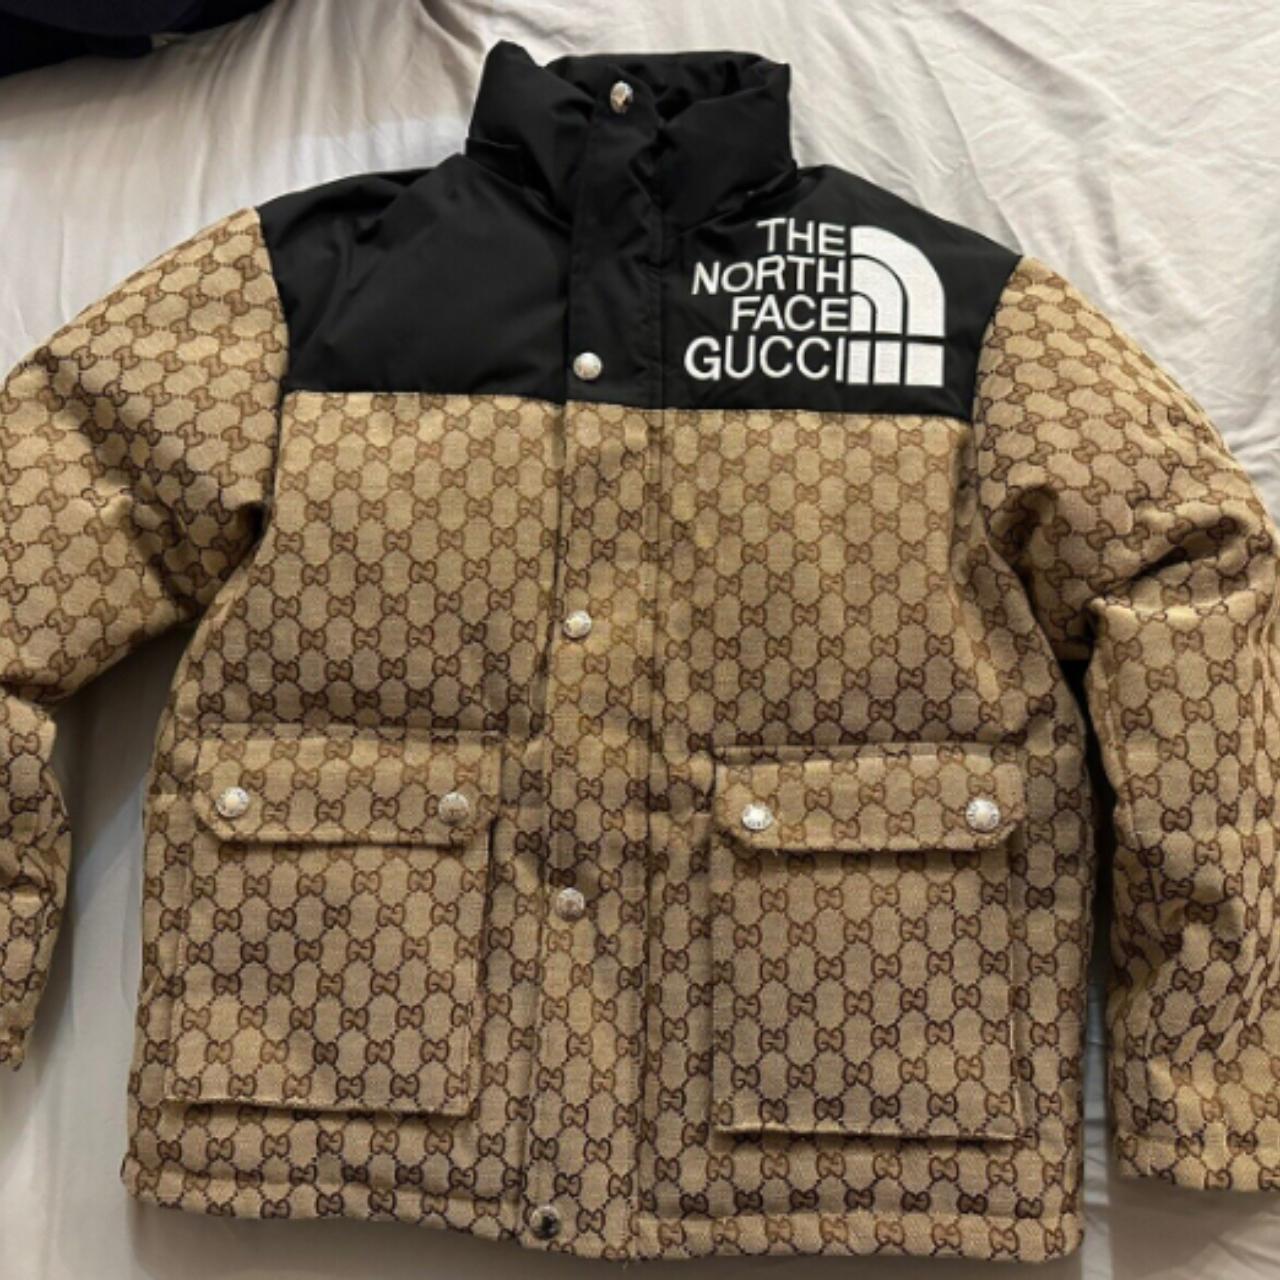 Gucci North Face Jacket - Depop